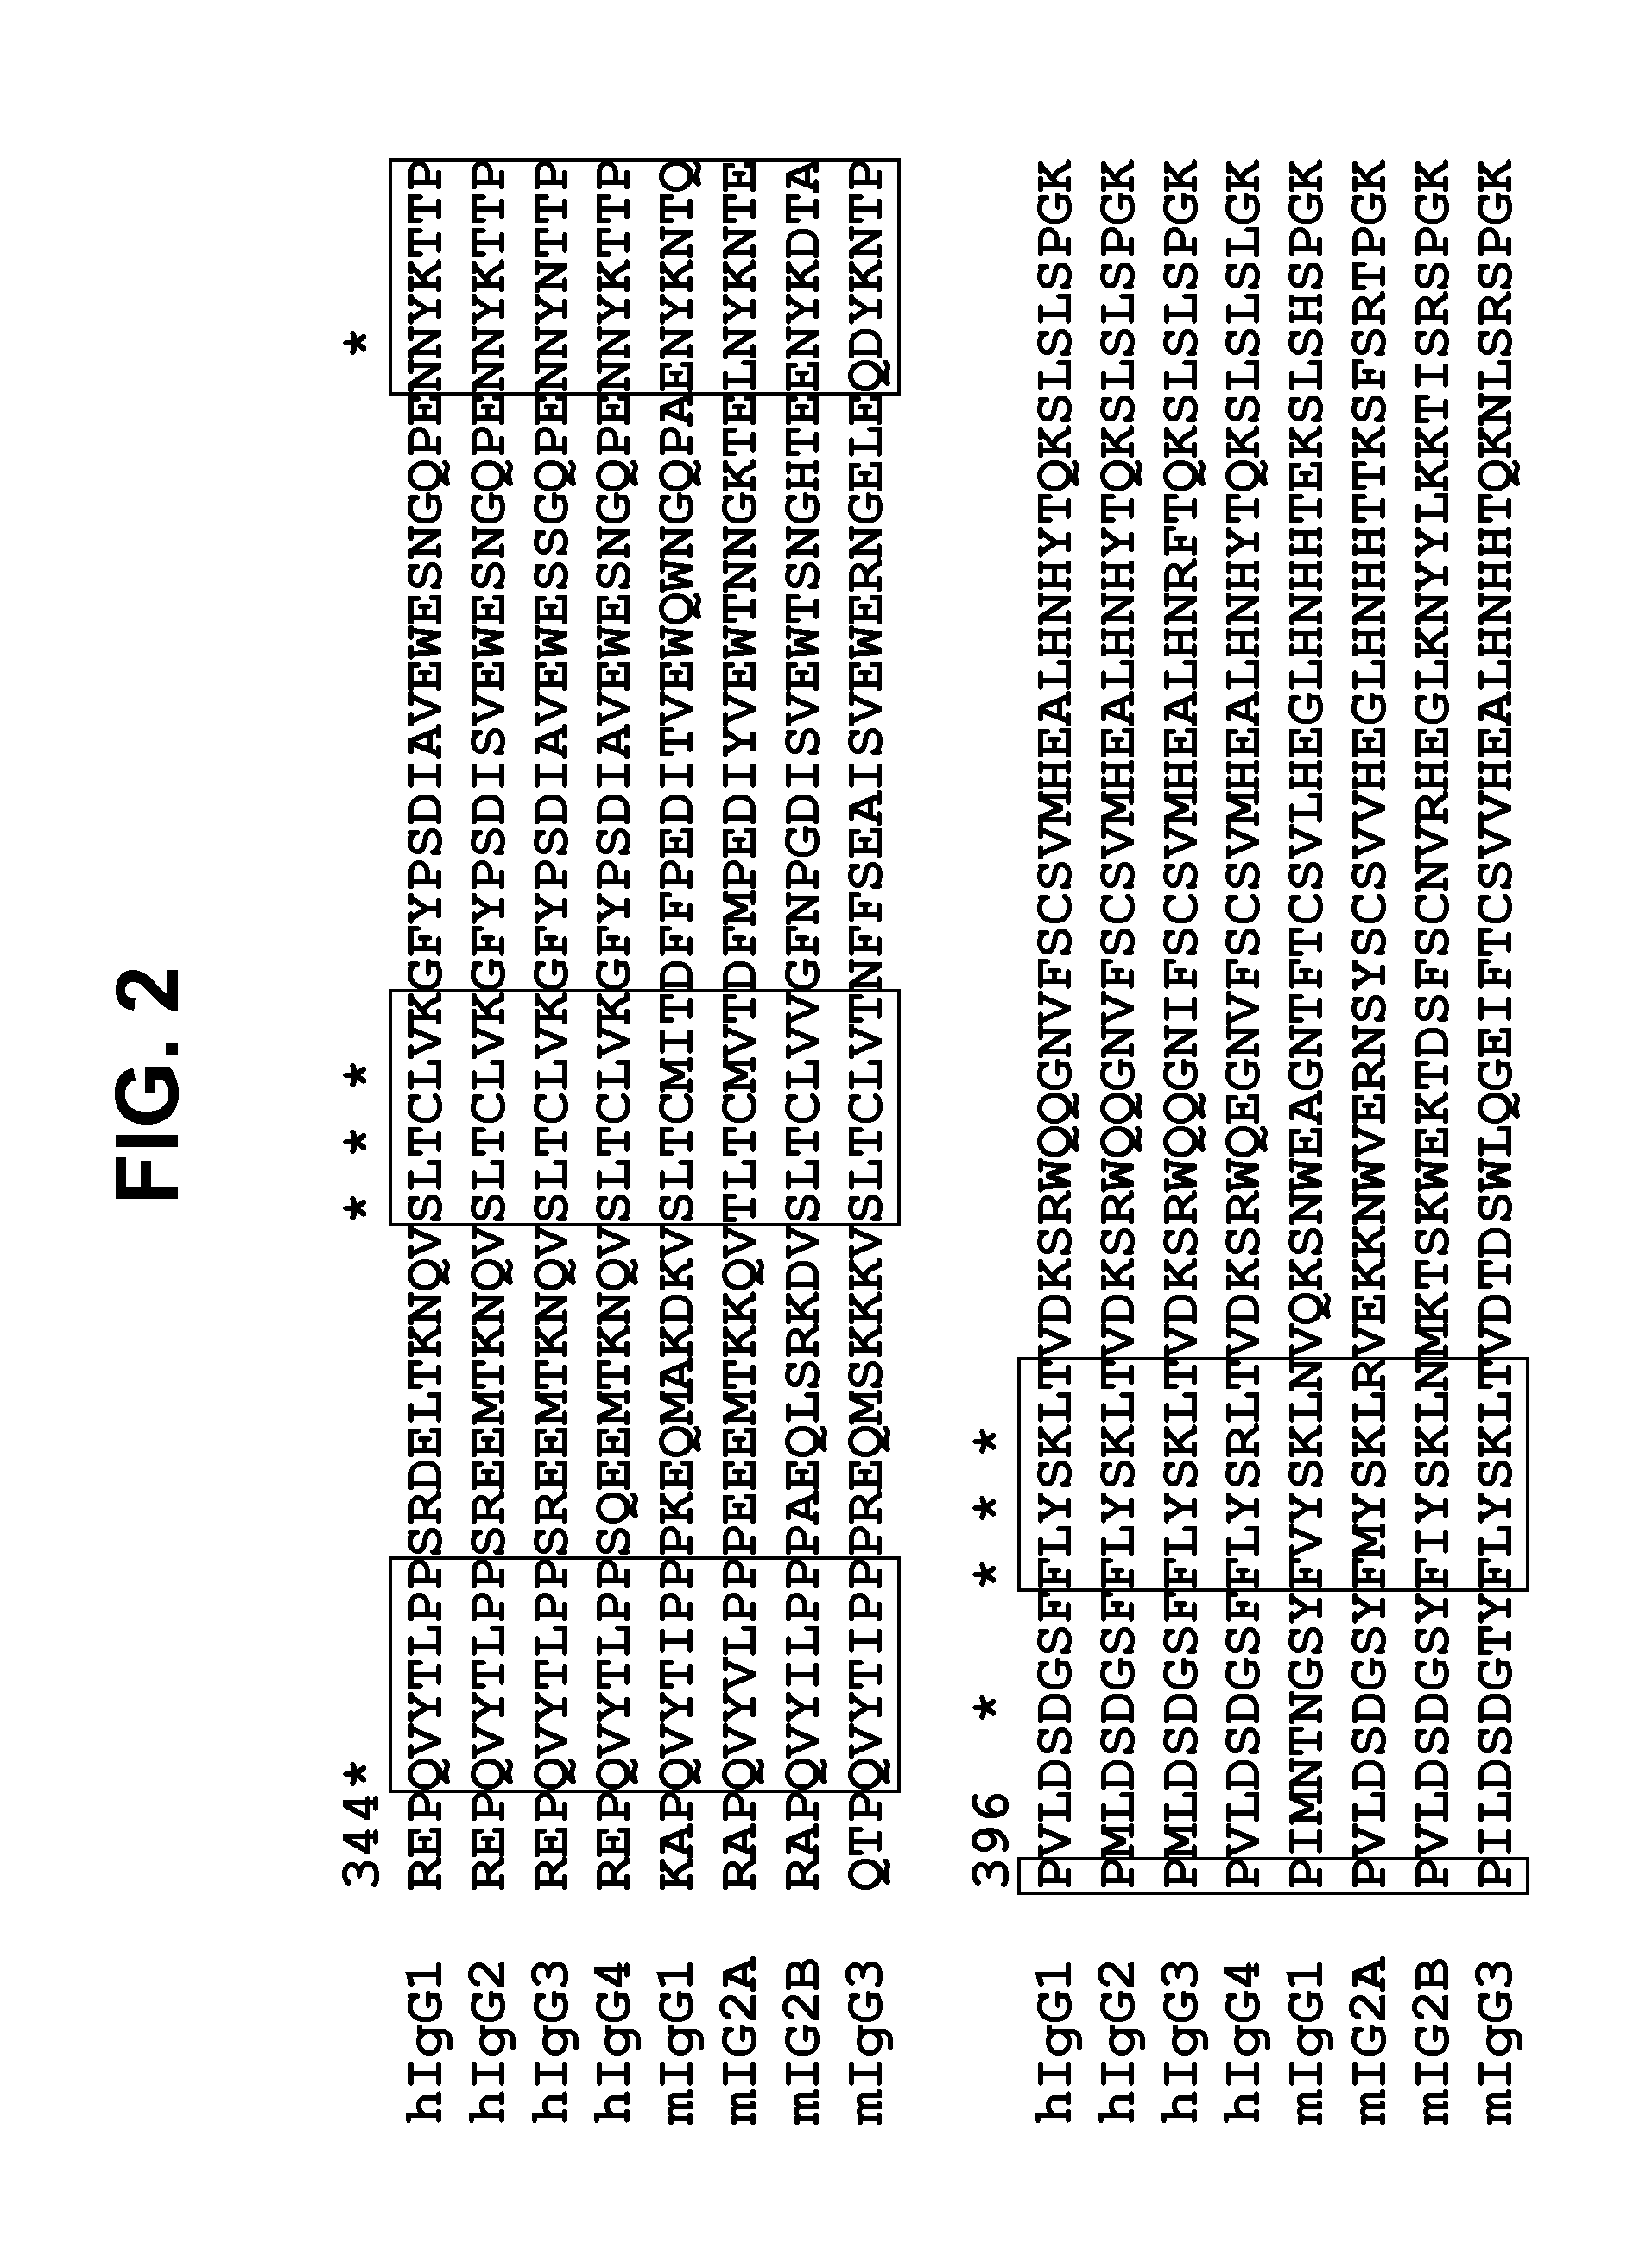 Engineered monomeric antibody fragments